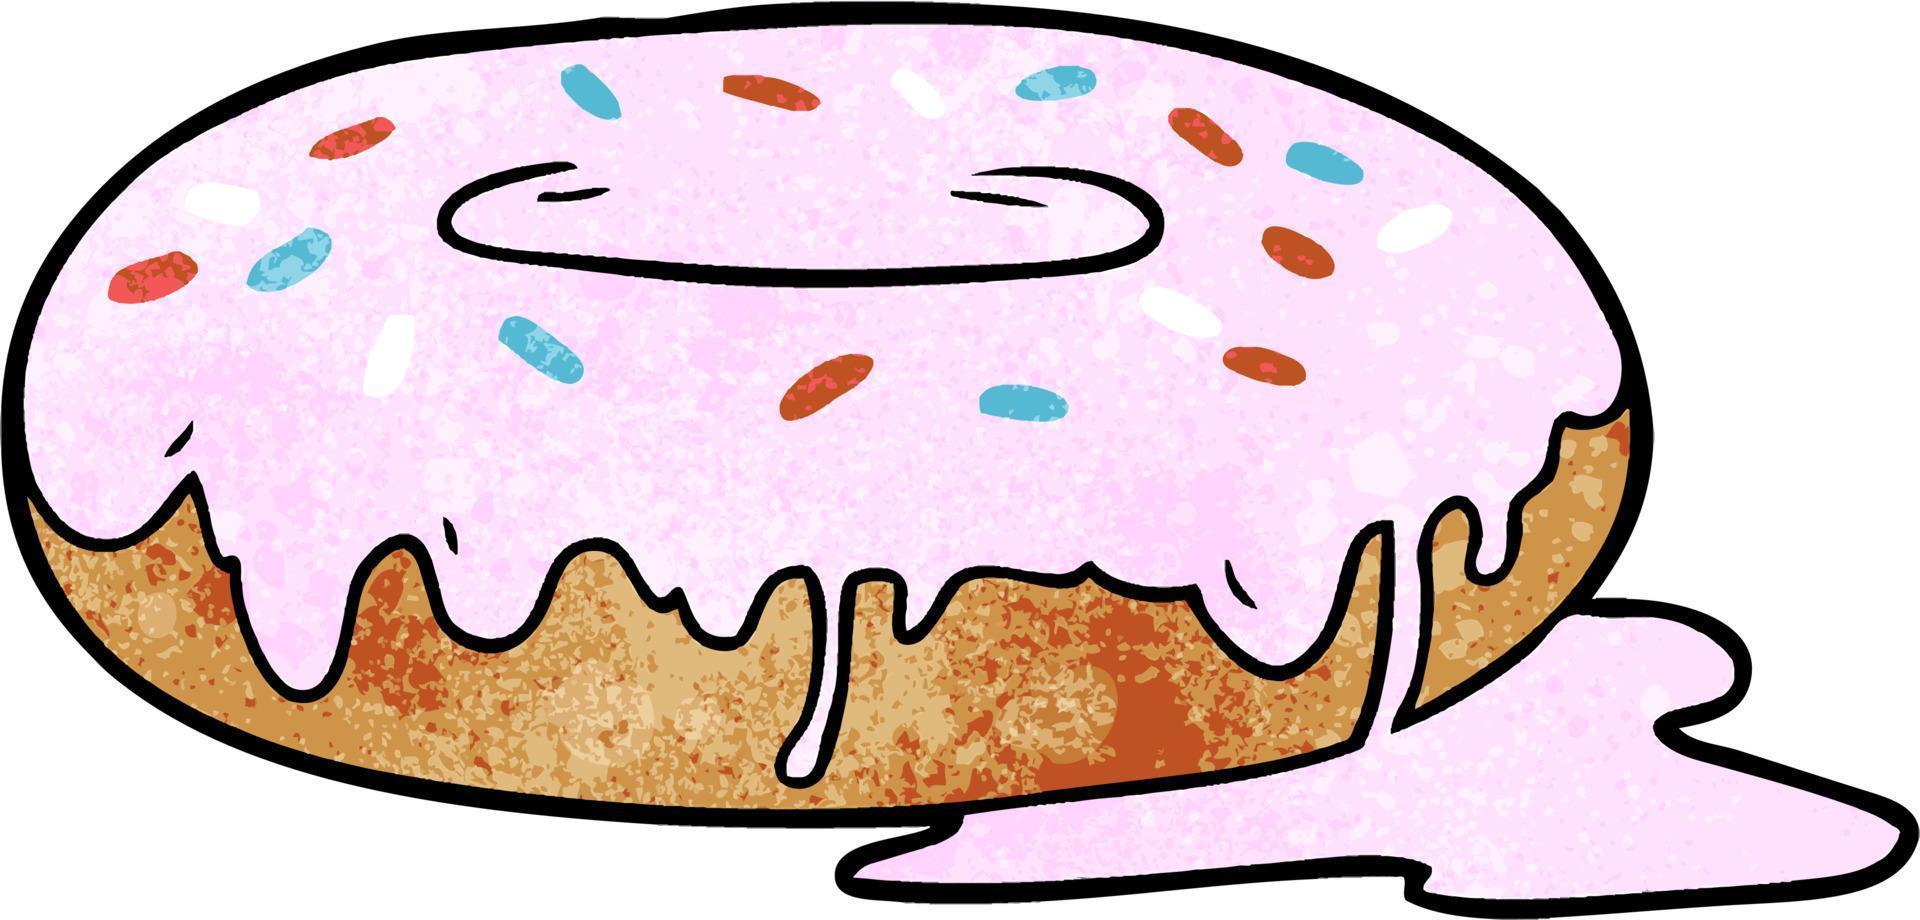 Retro grunge texture cartoon donut vector